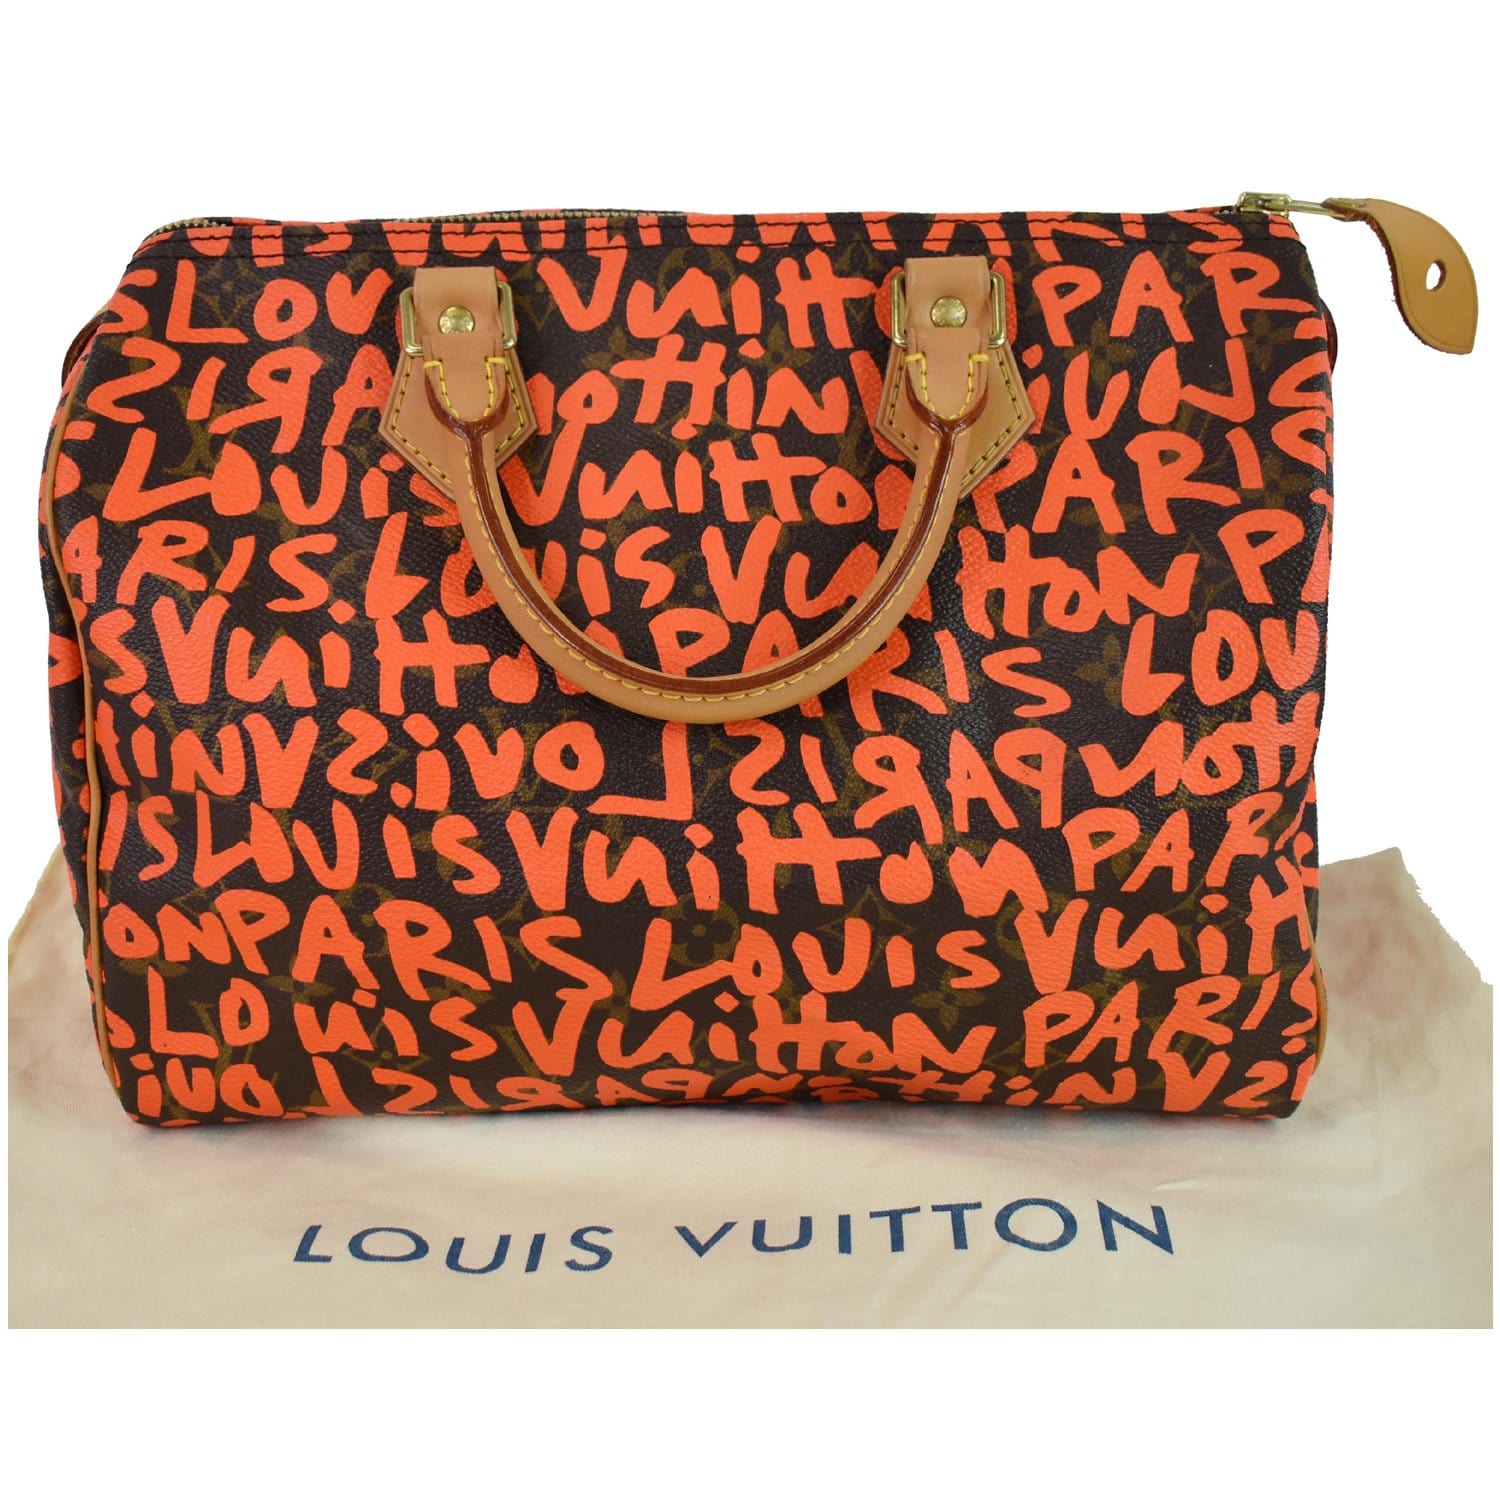 Louis Vuitton 2009 pre-owned Speedy 30 graffiti handbag - ShopStyle  Satchels & Top Handle Bags